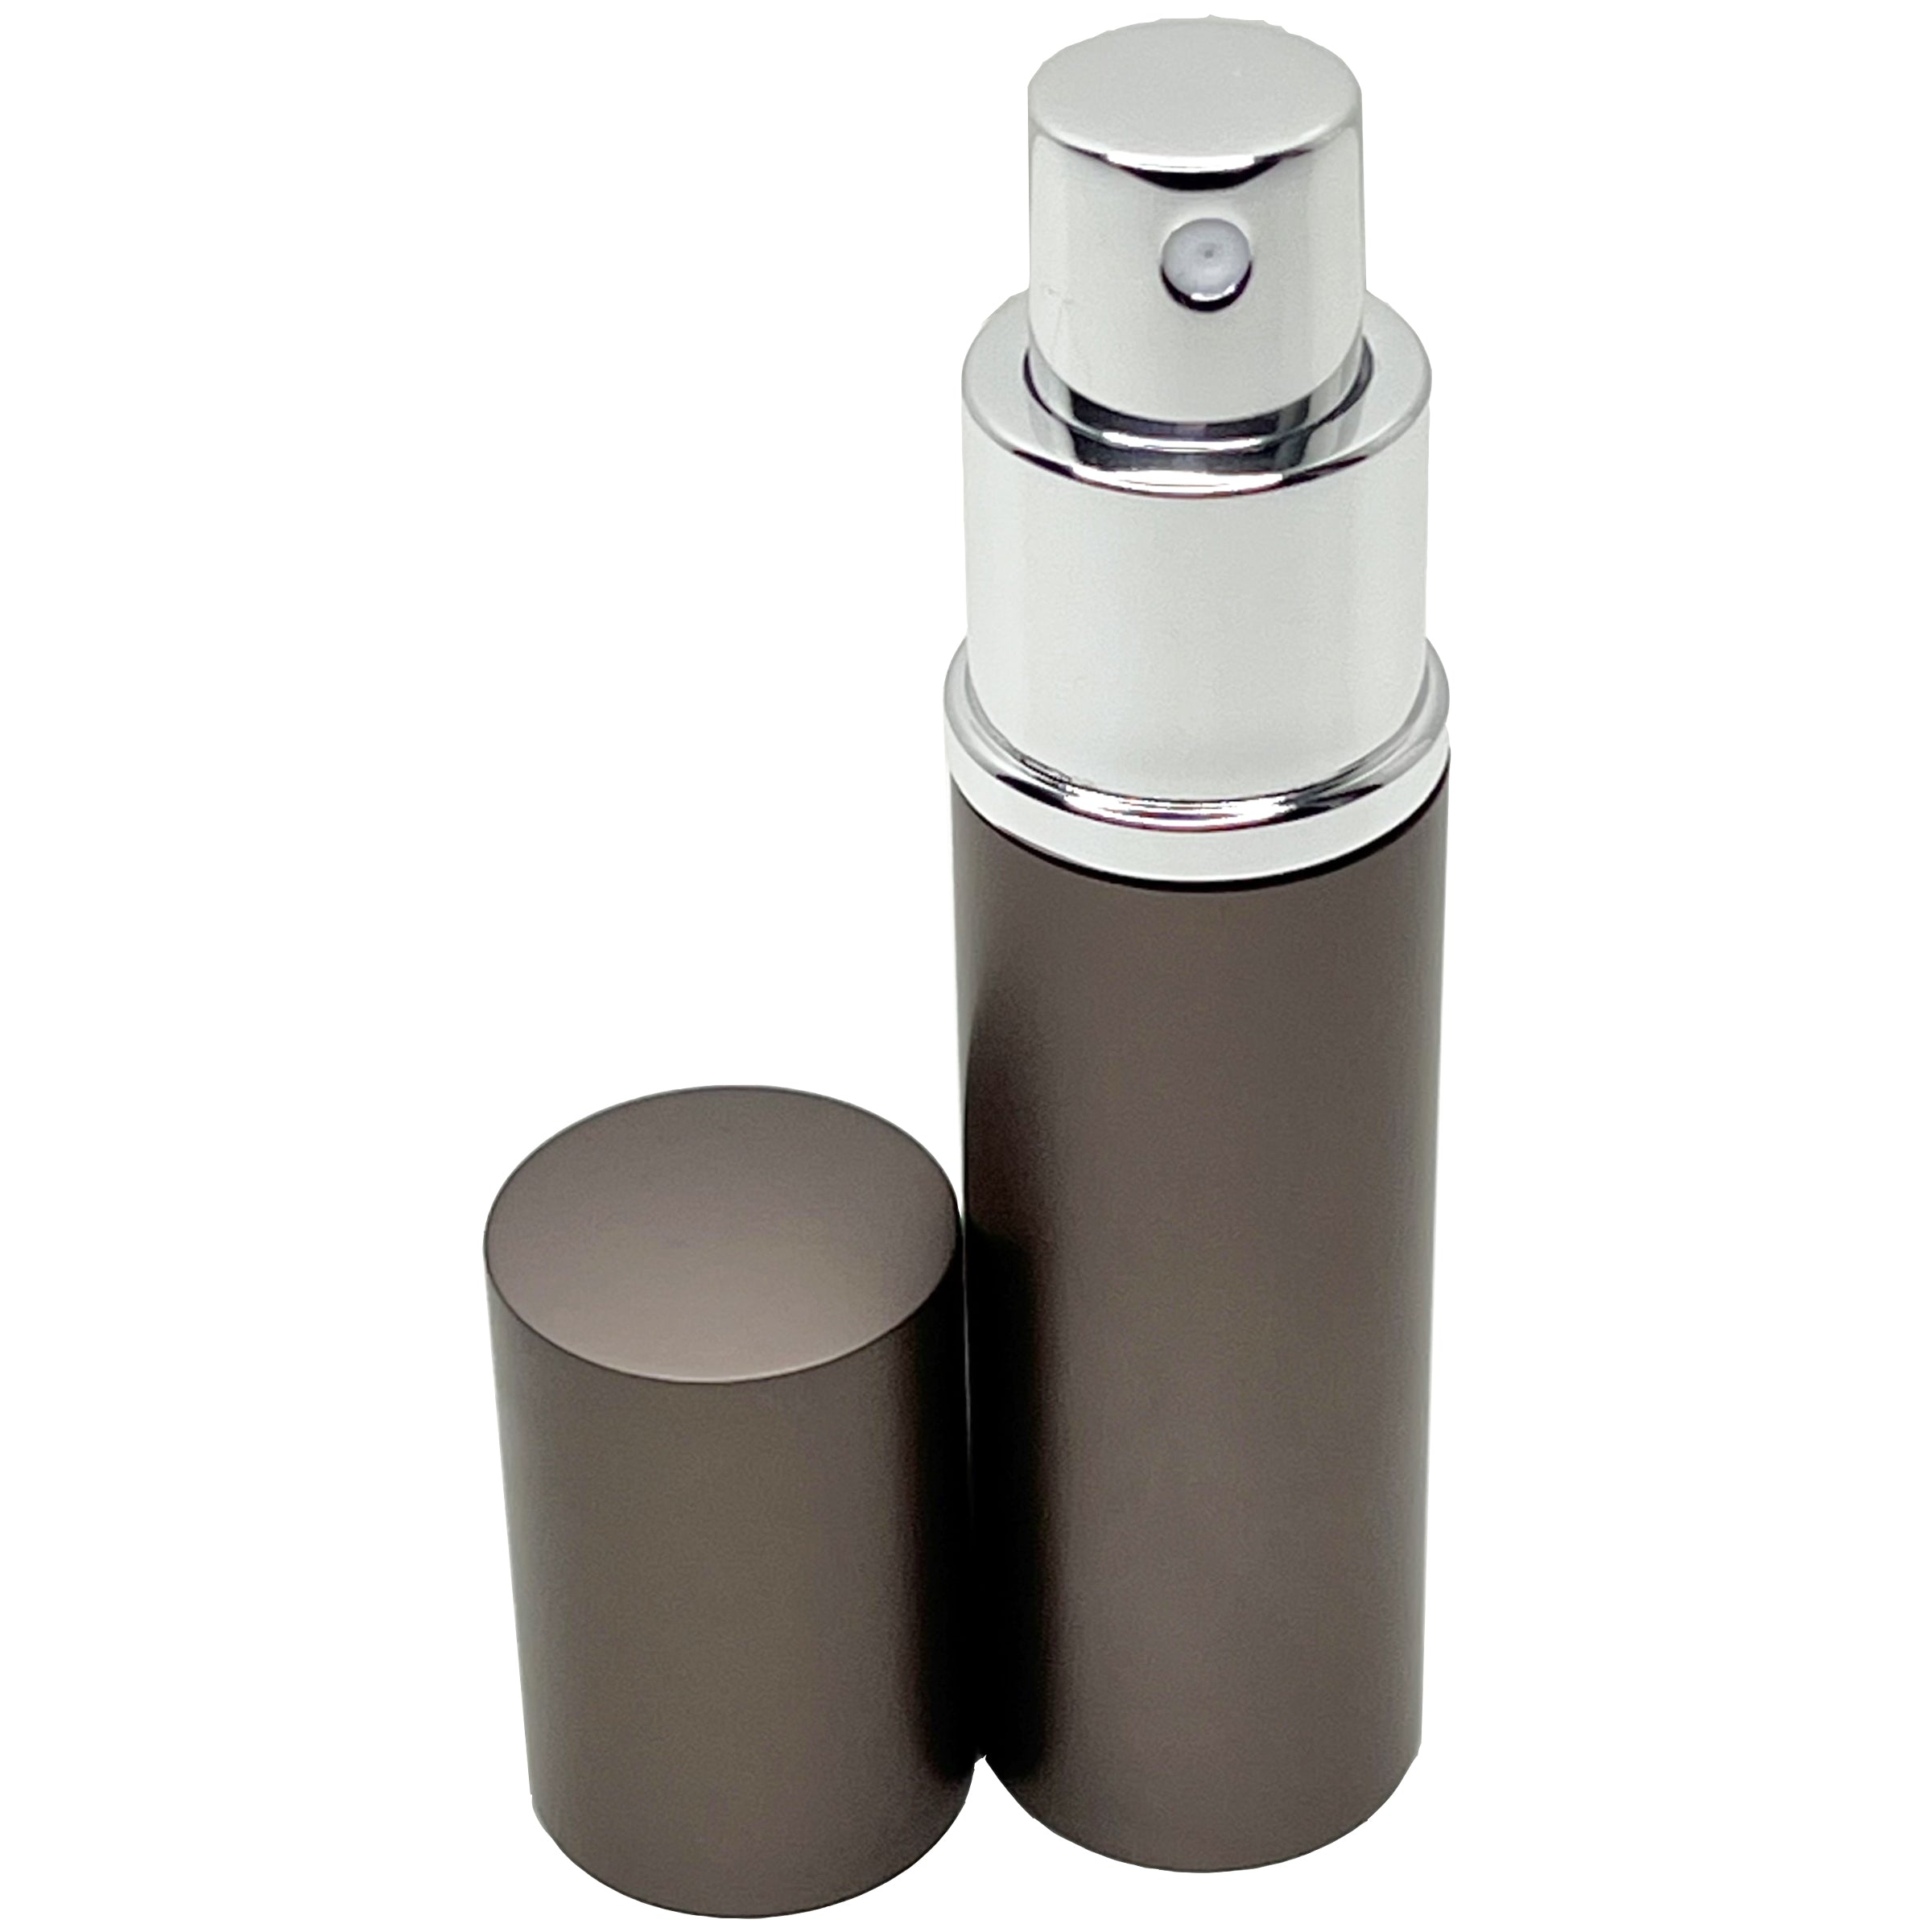 10ml 0.33oz perfume glass spray bottles deluxe coffee metal shell